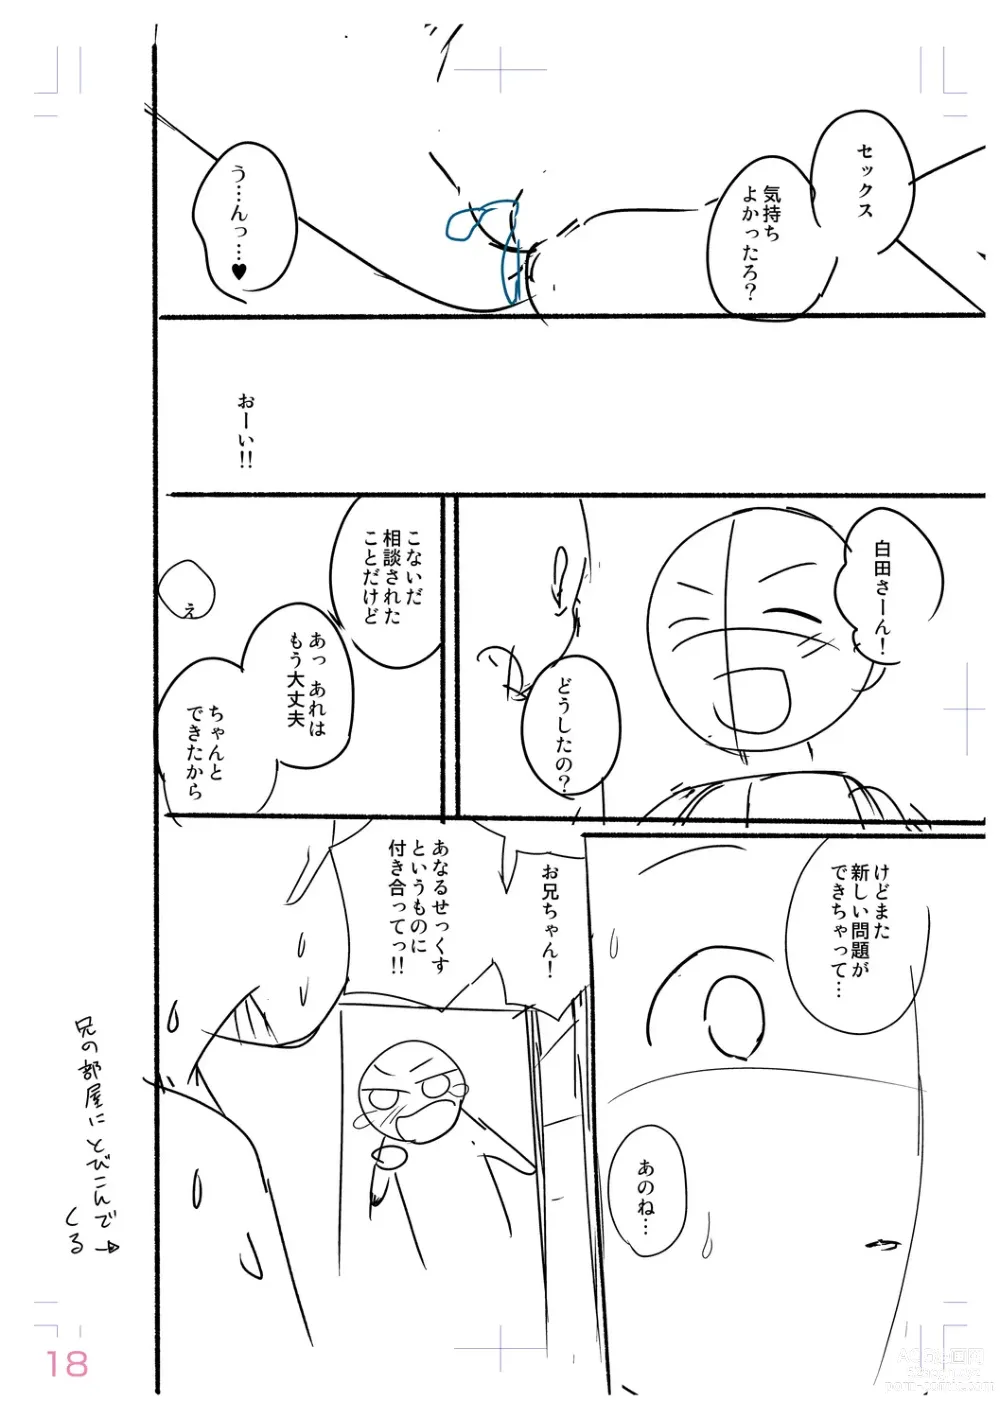 Page 244 of manga Shishunki wa Ichido dake - The one and only adolescence.